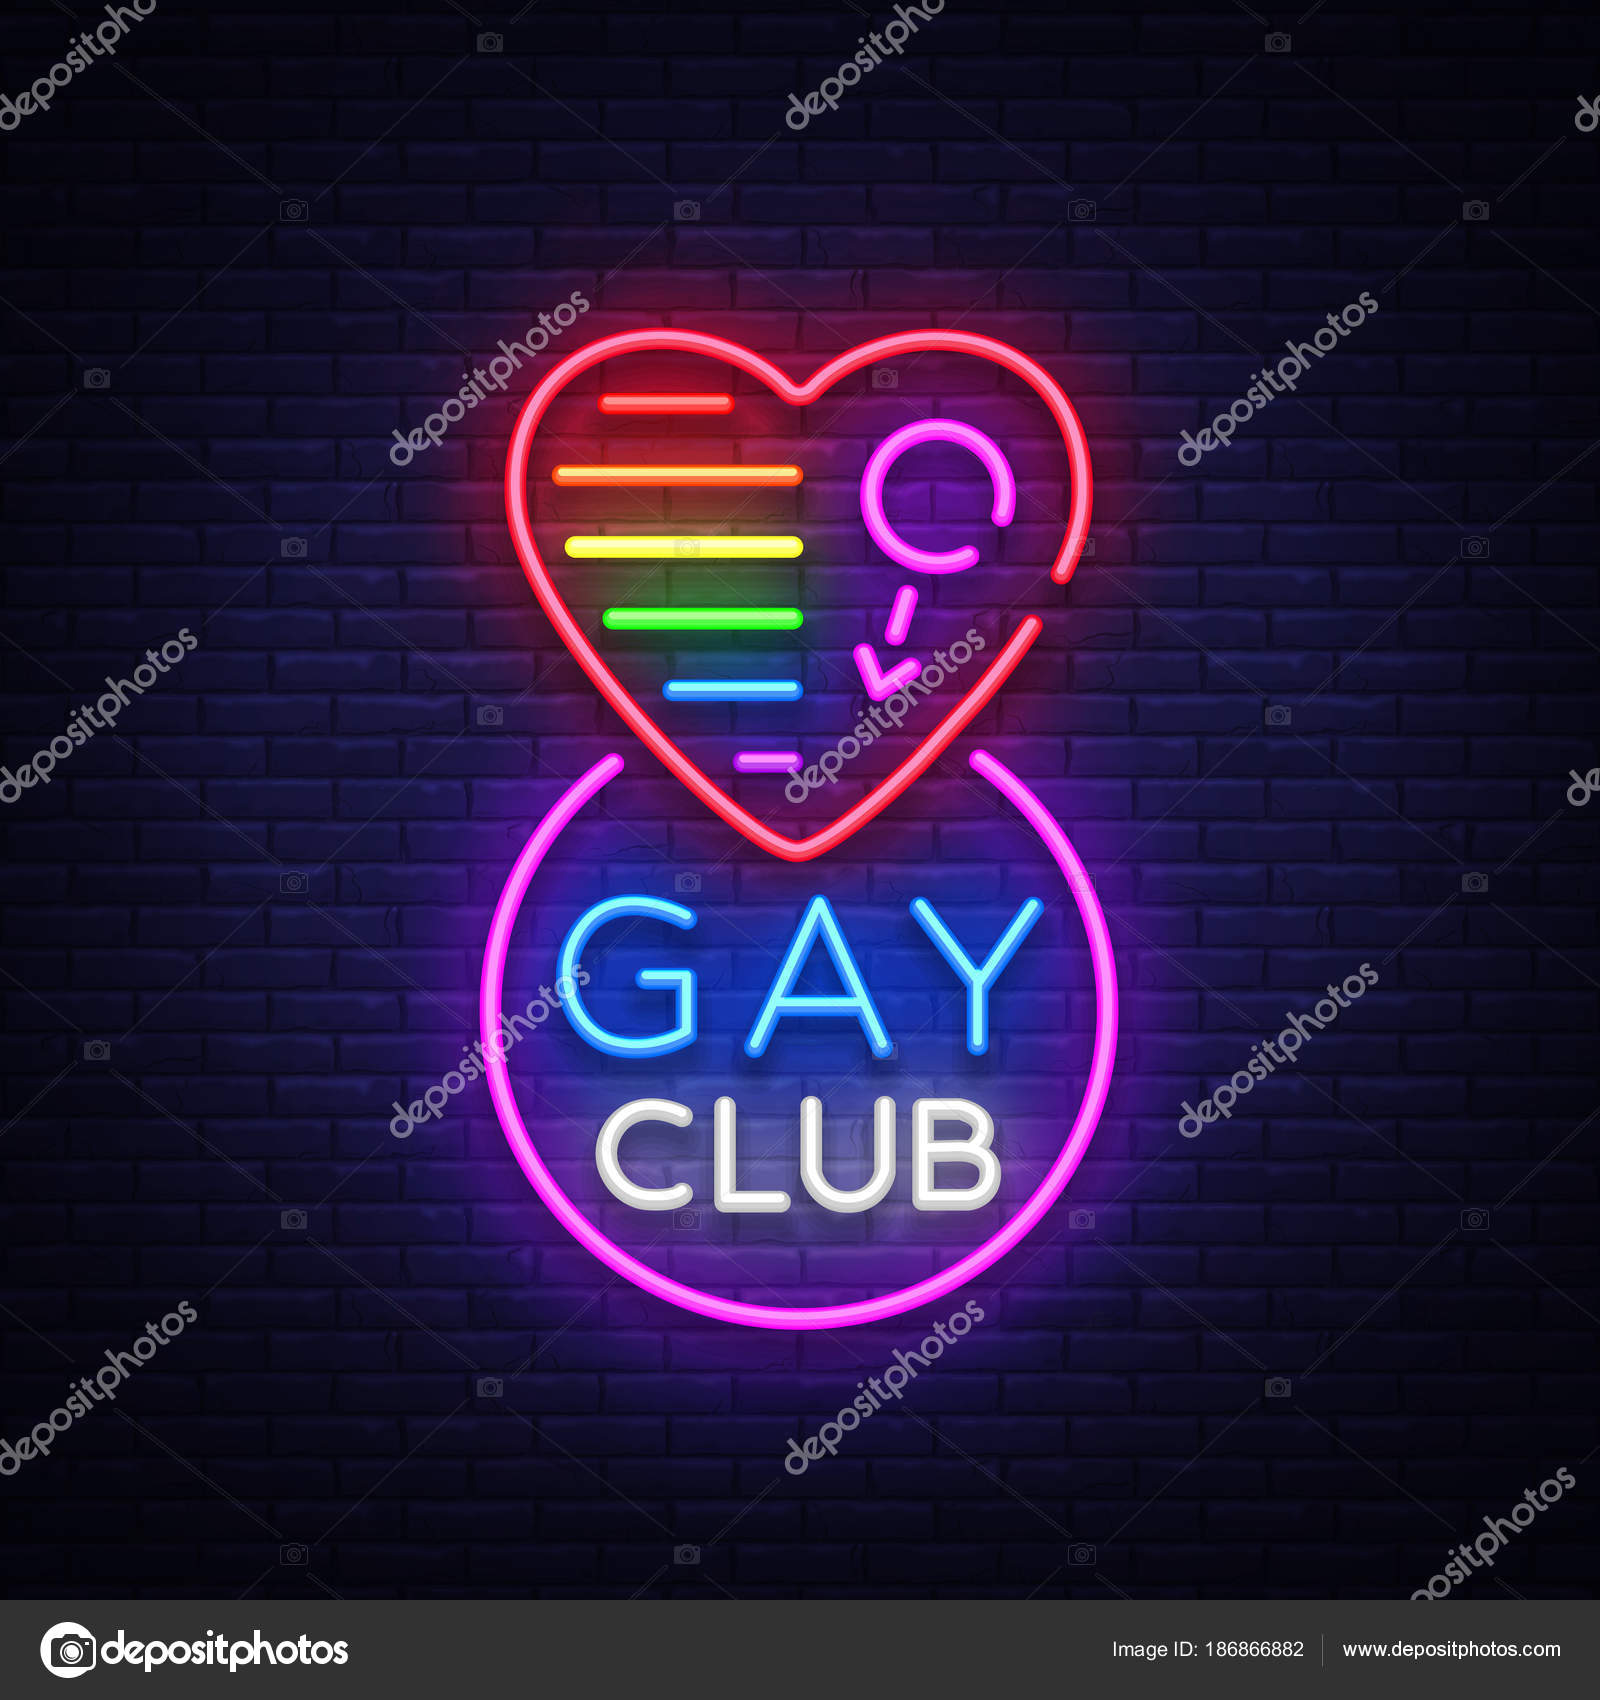 depositphotos_186866882-stock-illustration-gay-club-neon-sign-logo.jpg